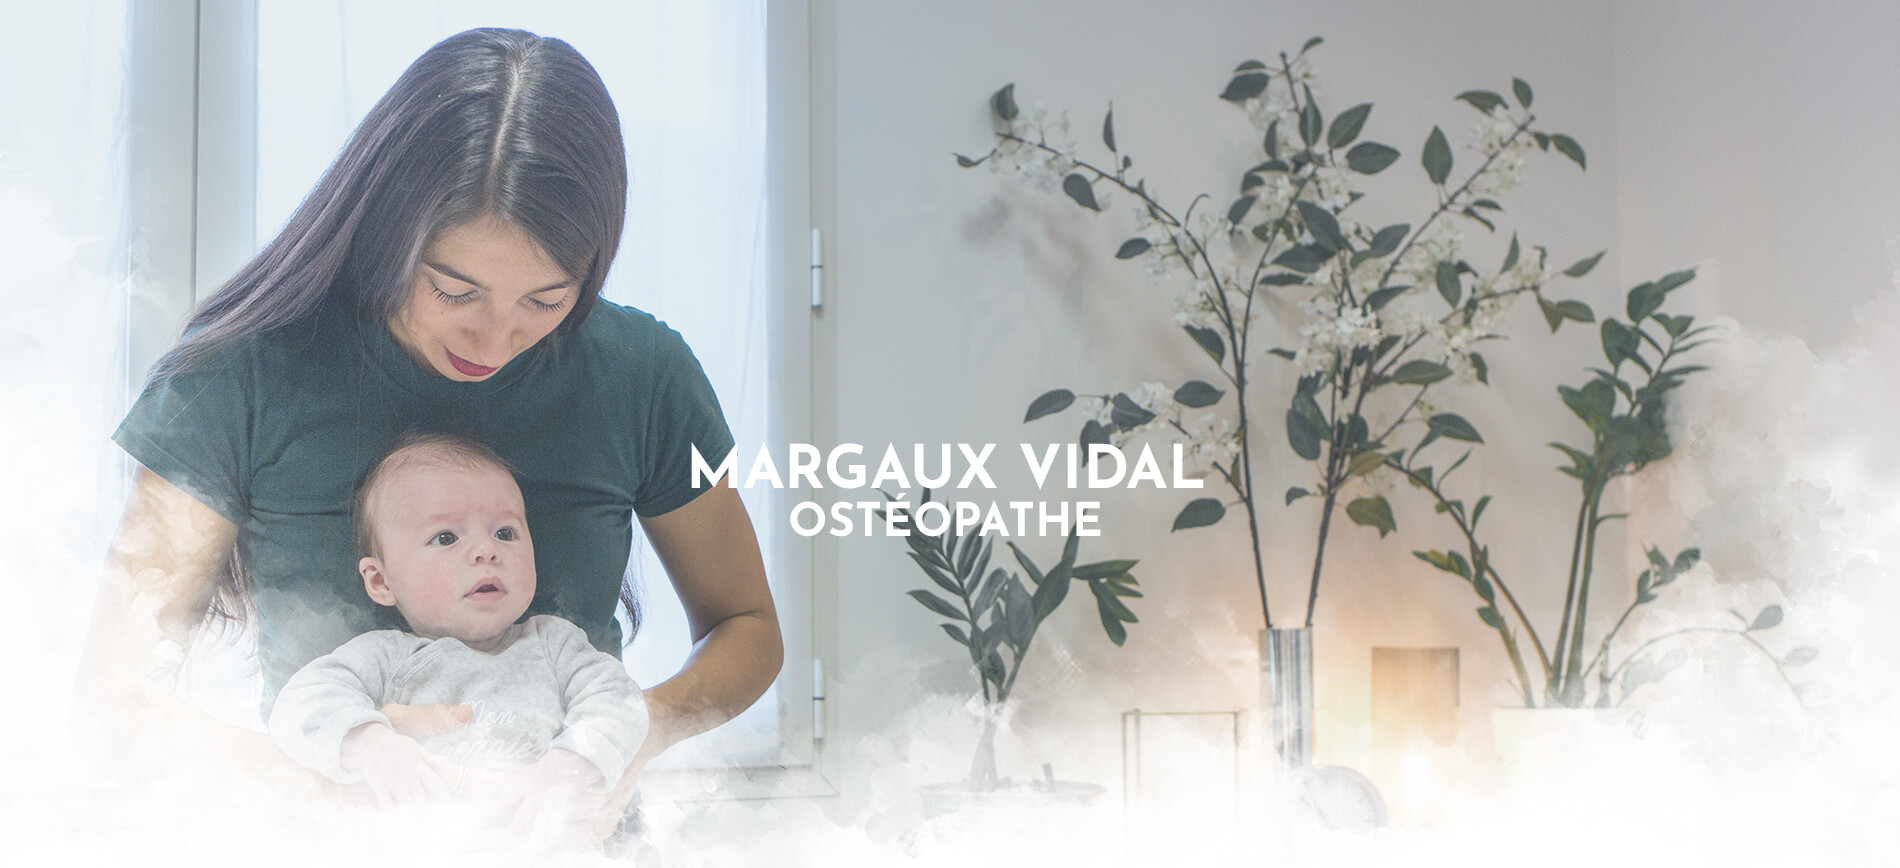 Margaux Vidal - Ostéopathe - Home header